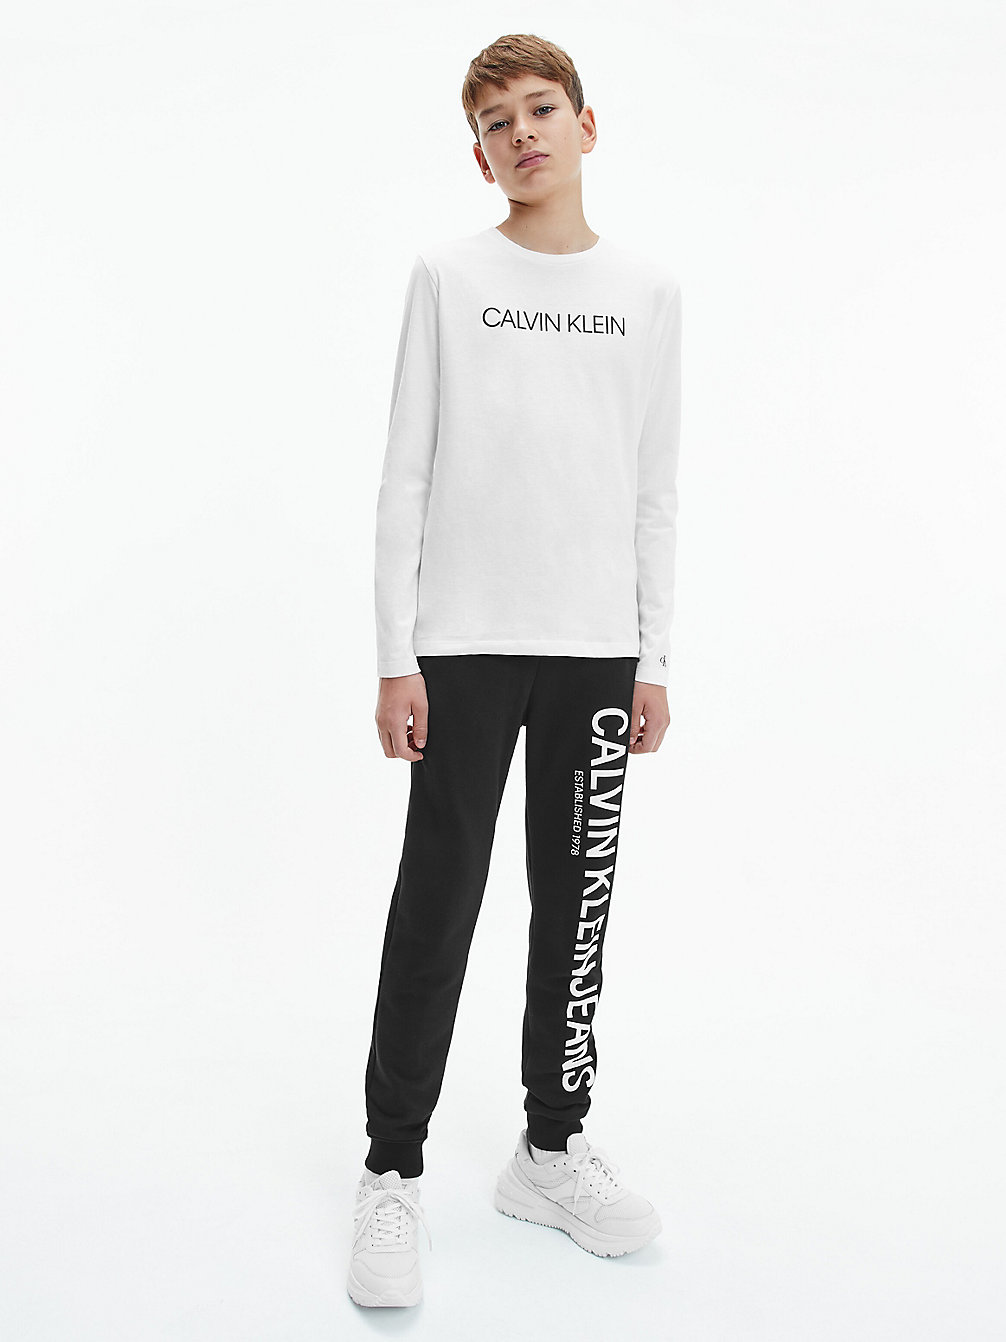 BRIGHT WHITE Organic Cotton Long Sleeve T-Shirt undefined boys Calvin Klein